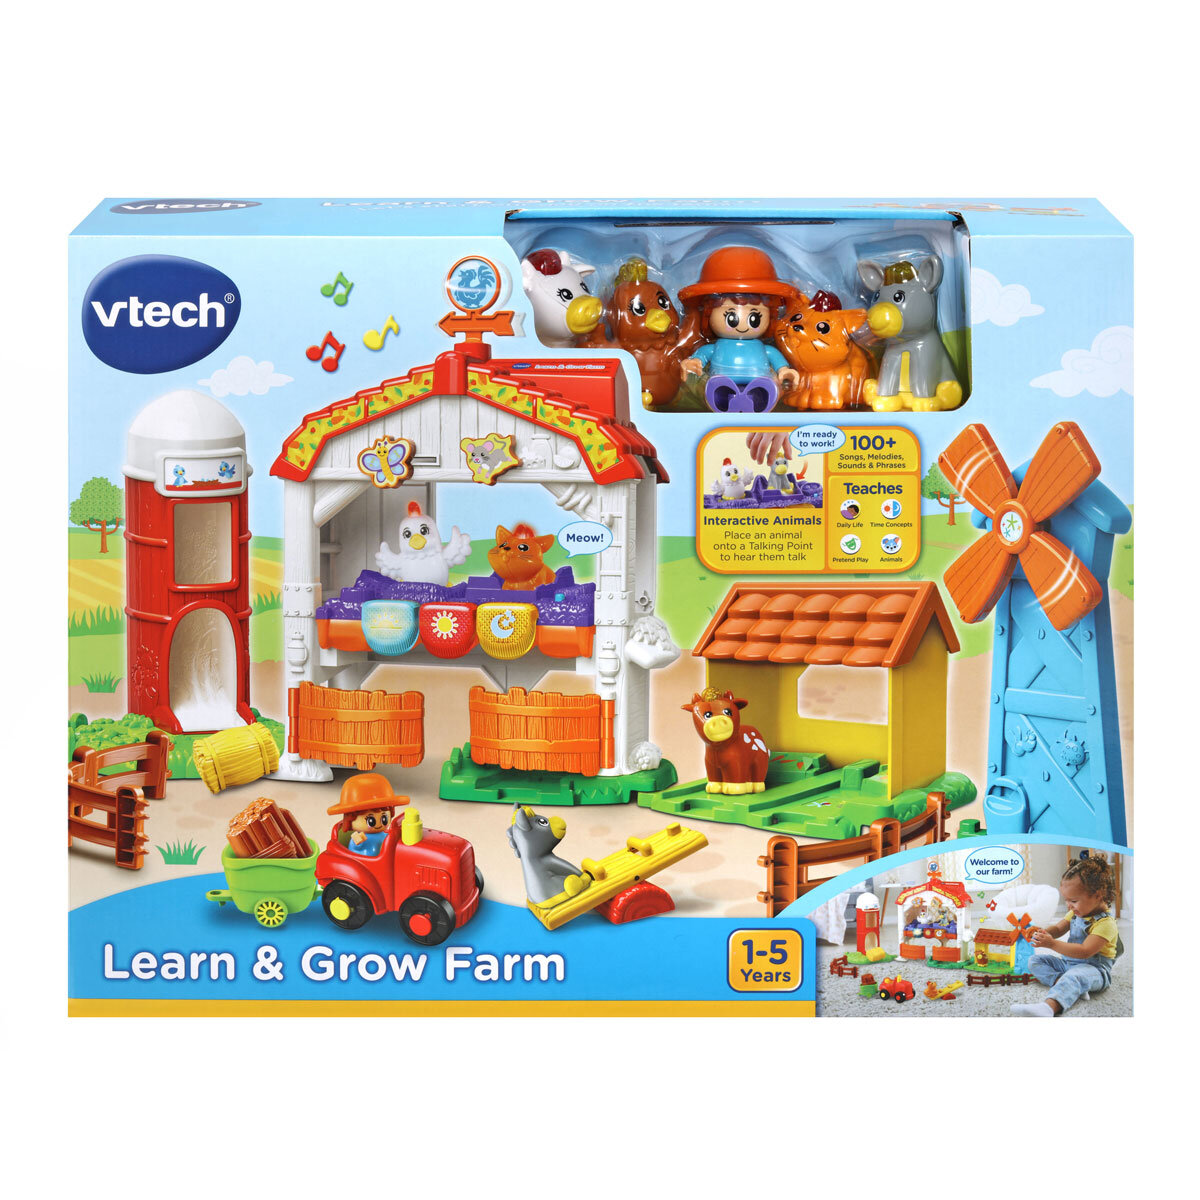 Buy VTech Learn & Grow Farm Box Image at Costco.co.uk